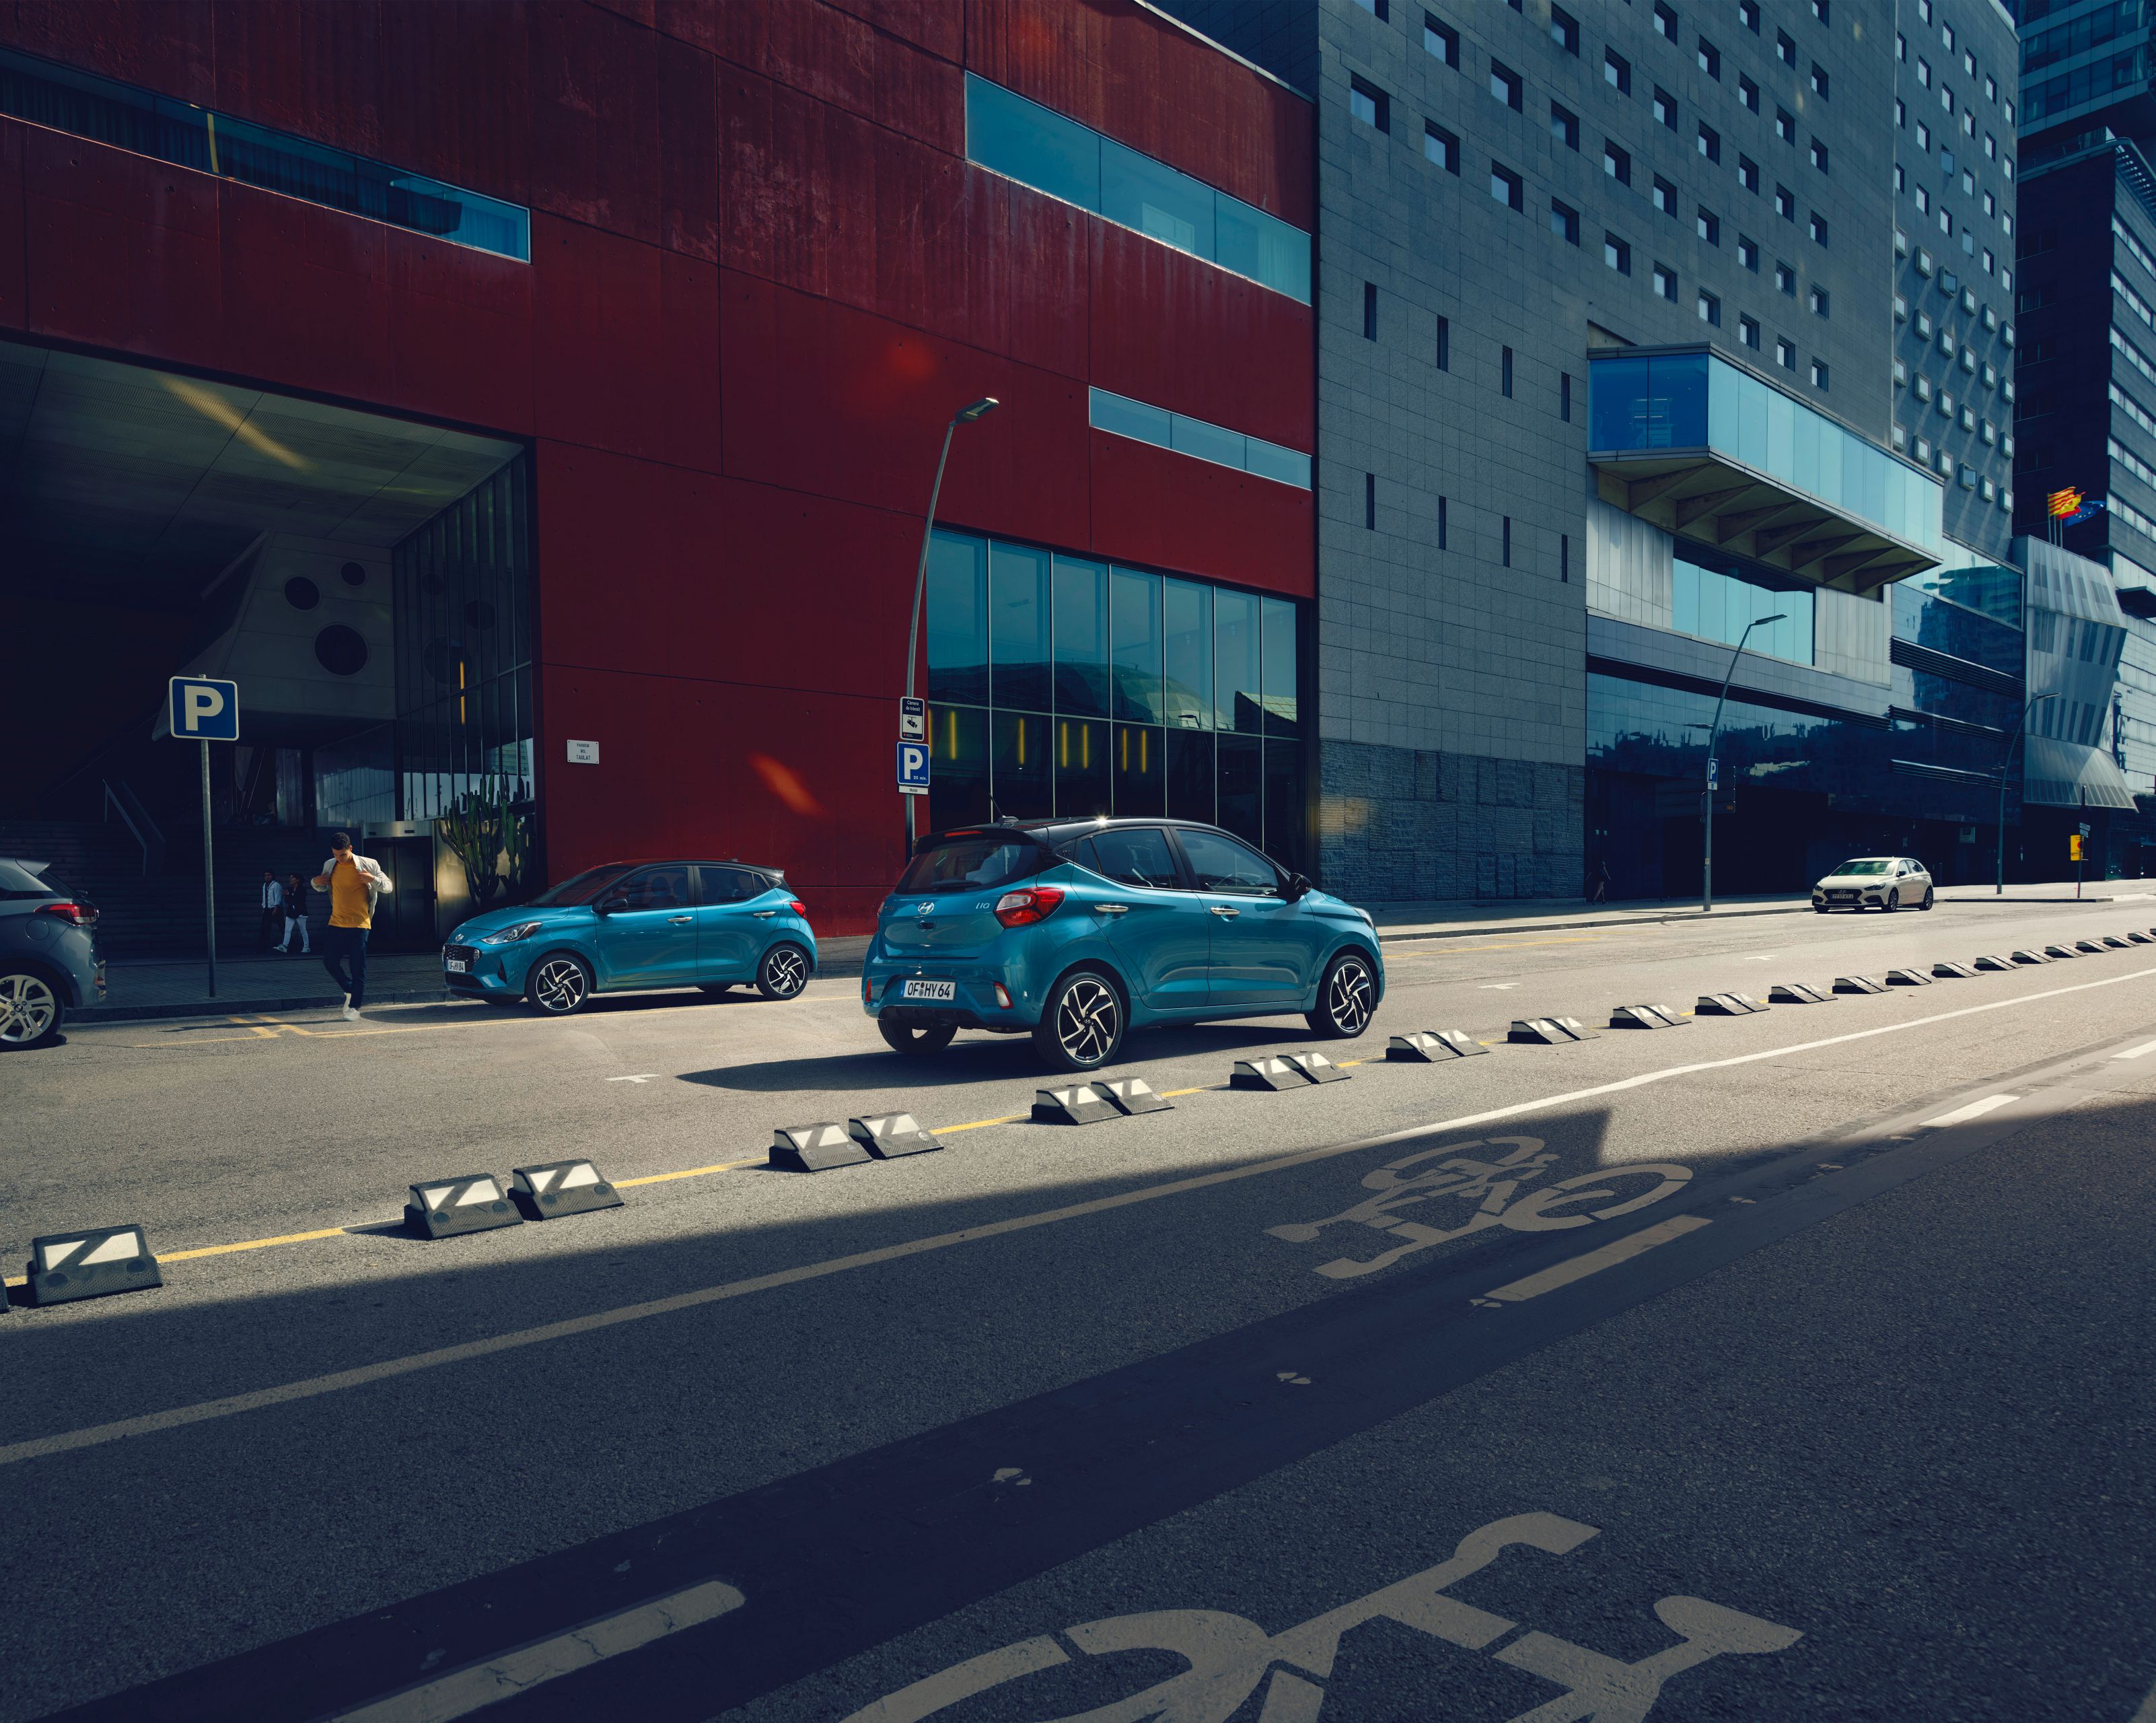 The Hyundai i10 in Aqua Turquoise Metallic driving through the city.